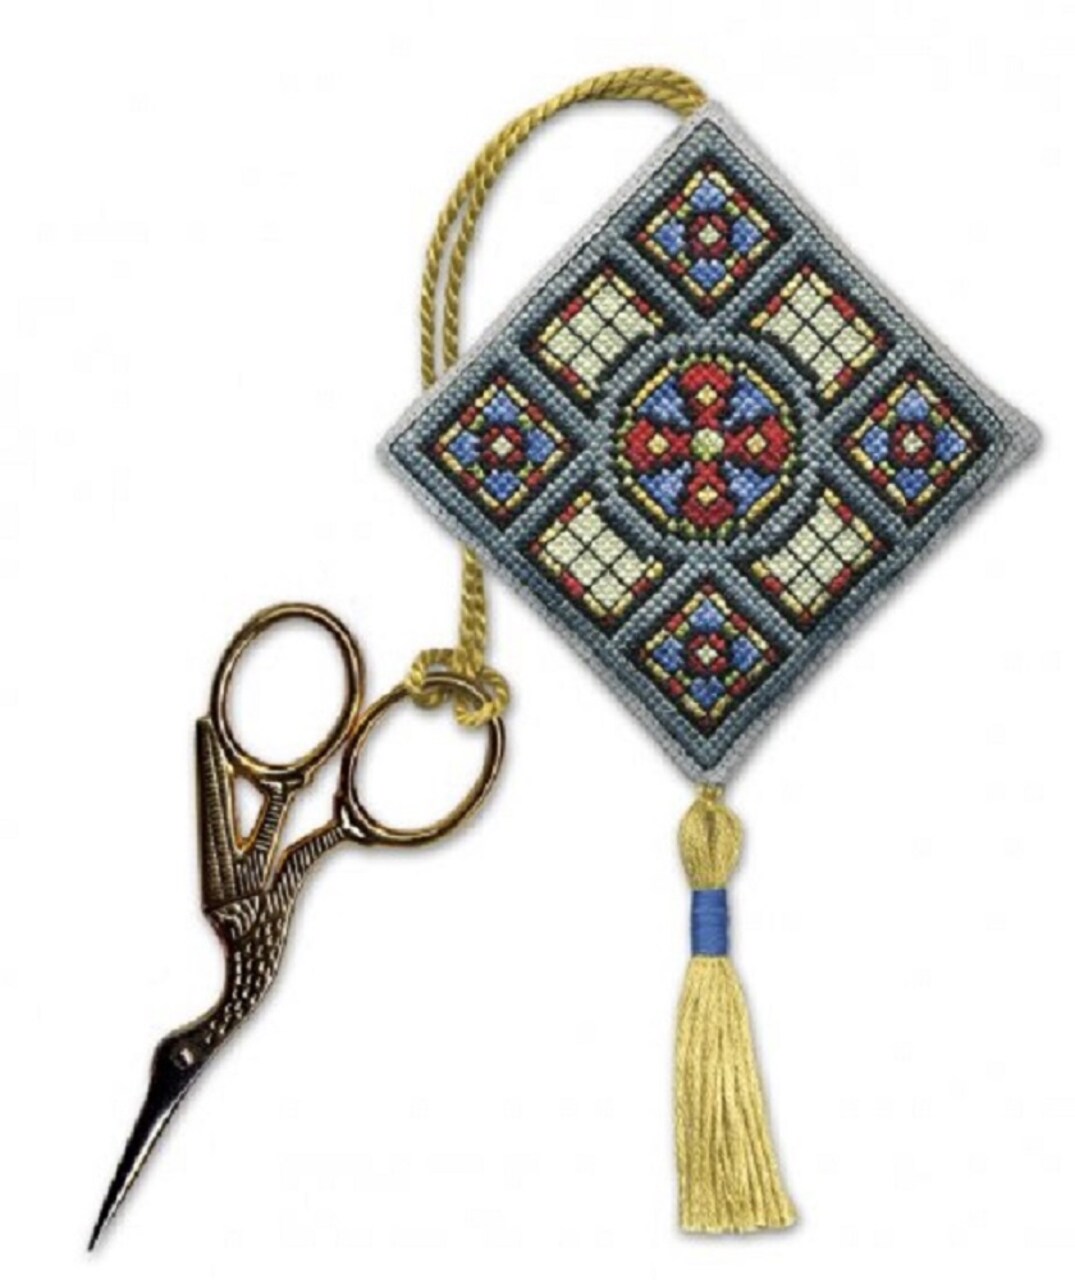 Textile Heritage Scissor Keep Cross Stitch Kit - Stained Glass Window